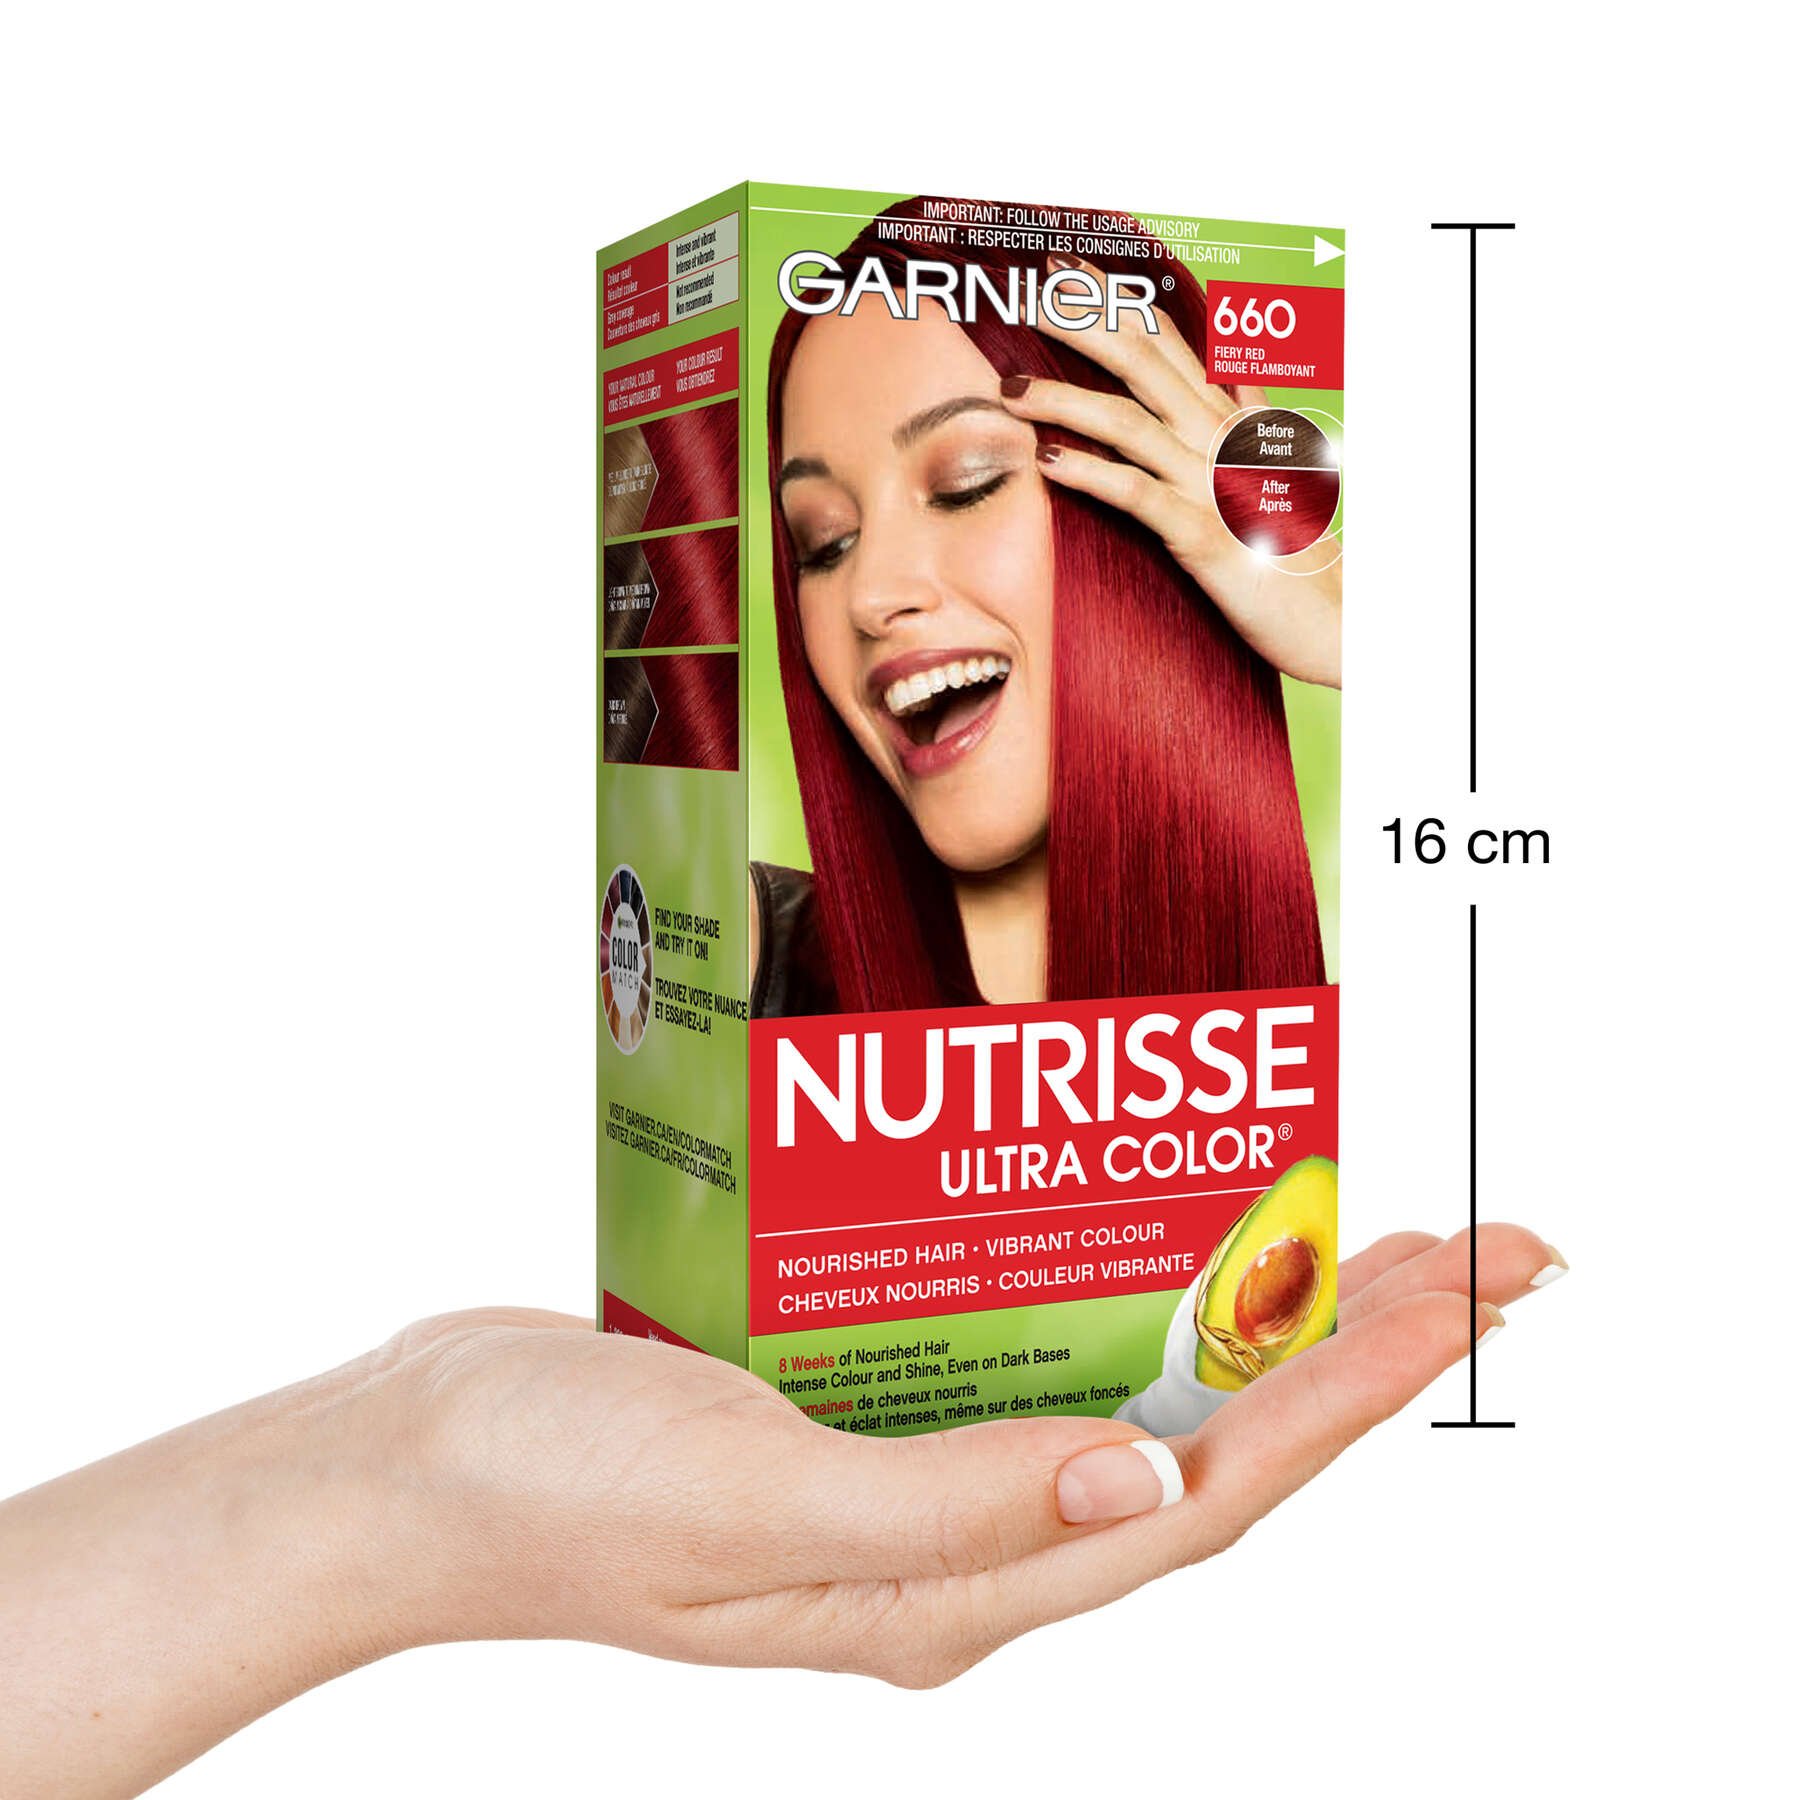 garnier hair dye nutrisse ultra color 660 fiery red 770103147918 inhand